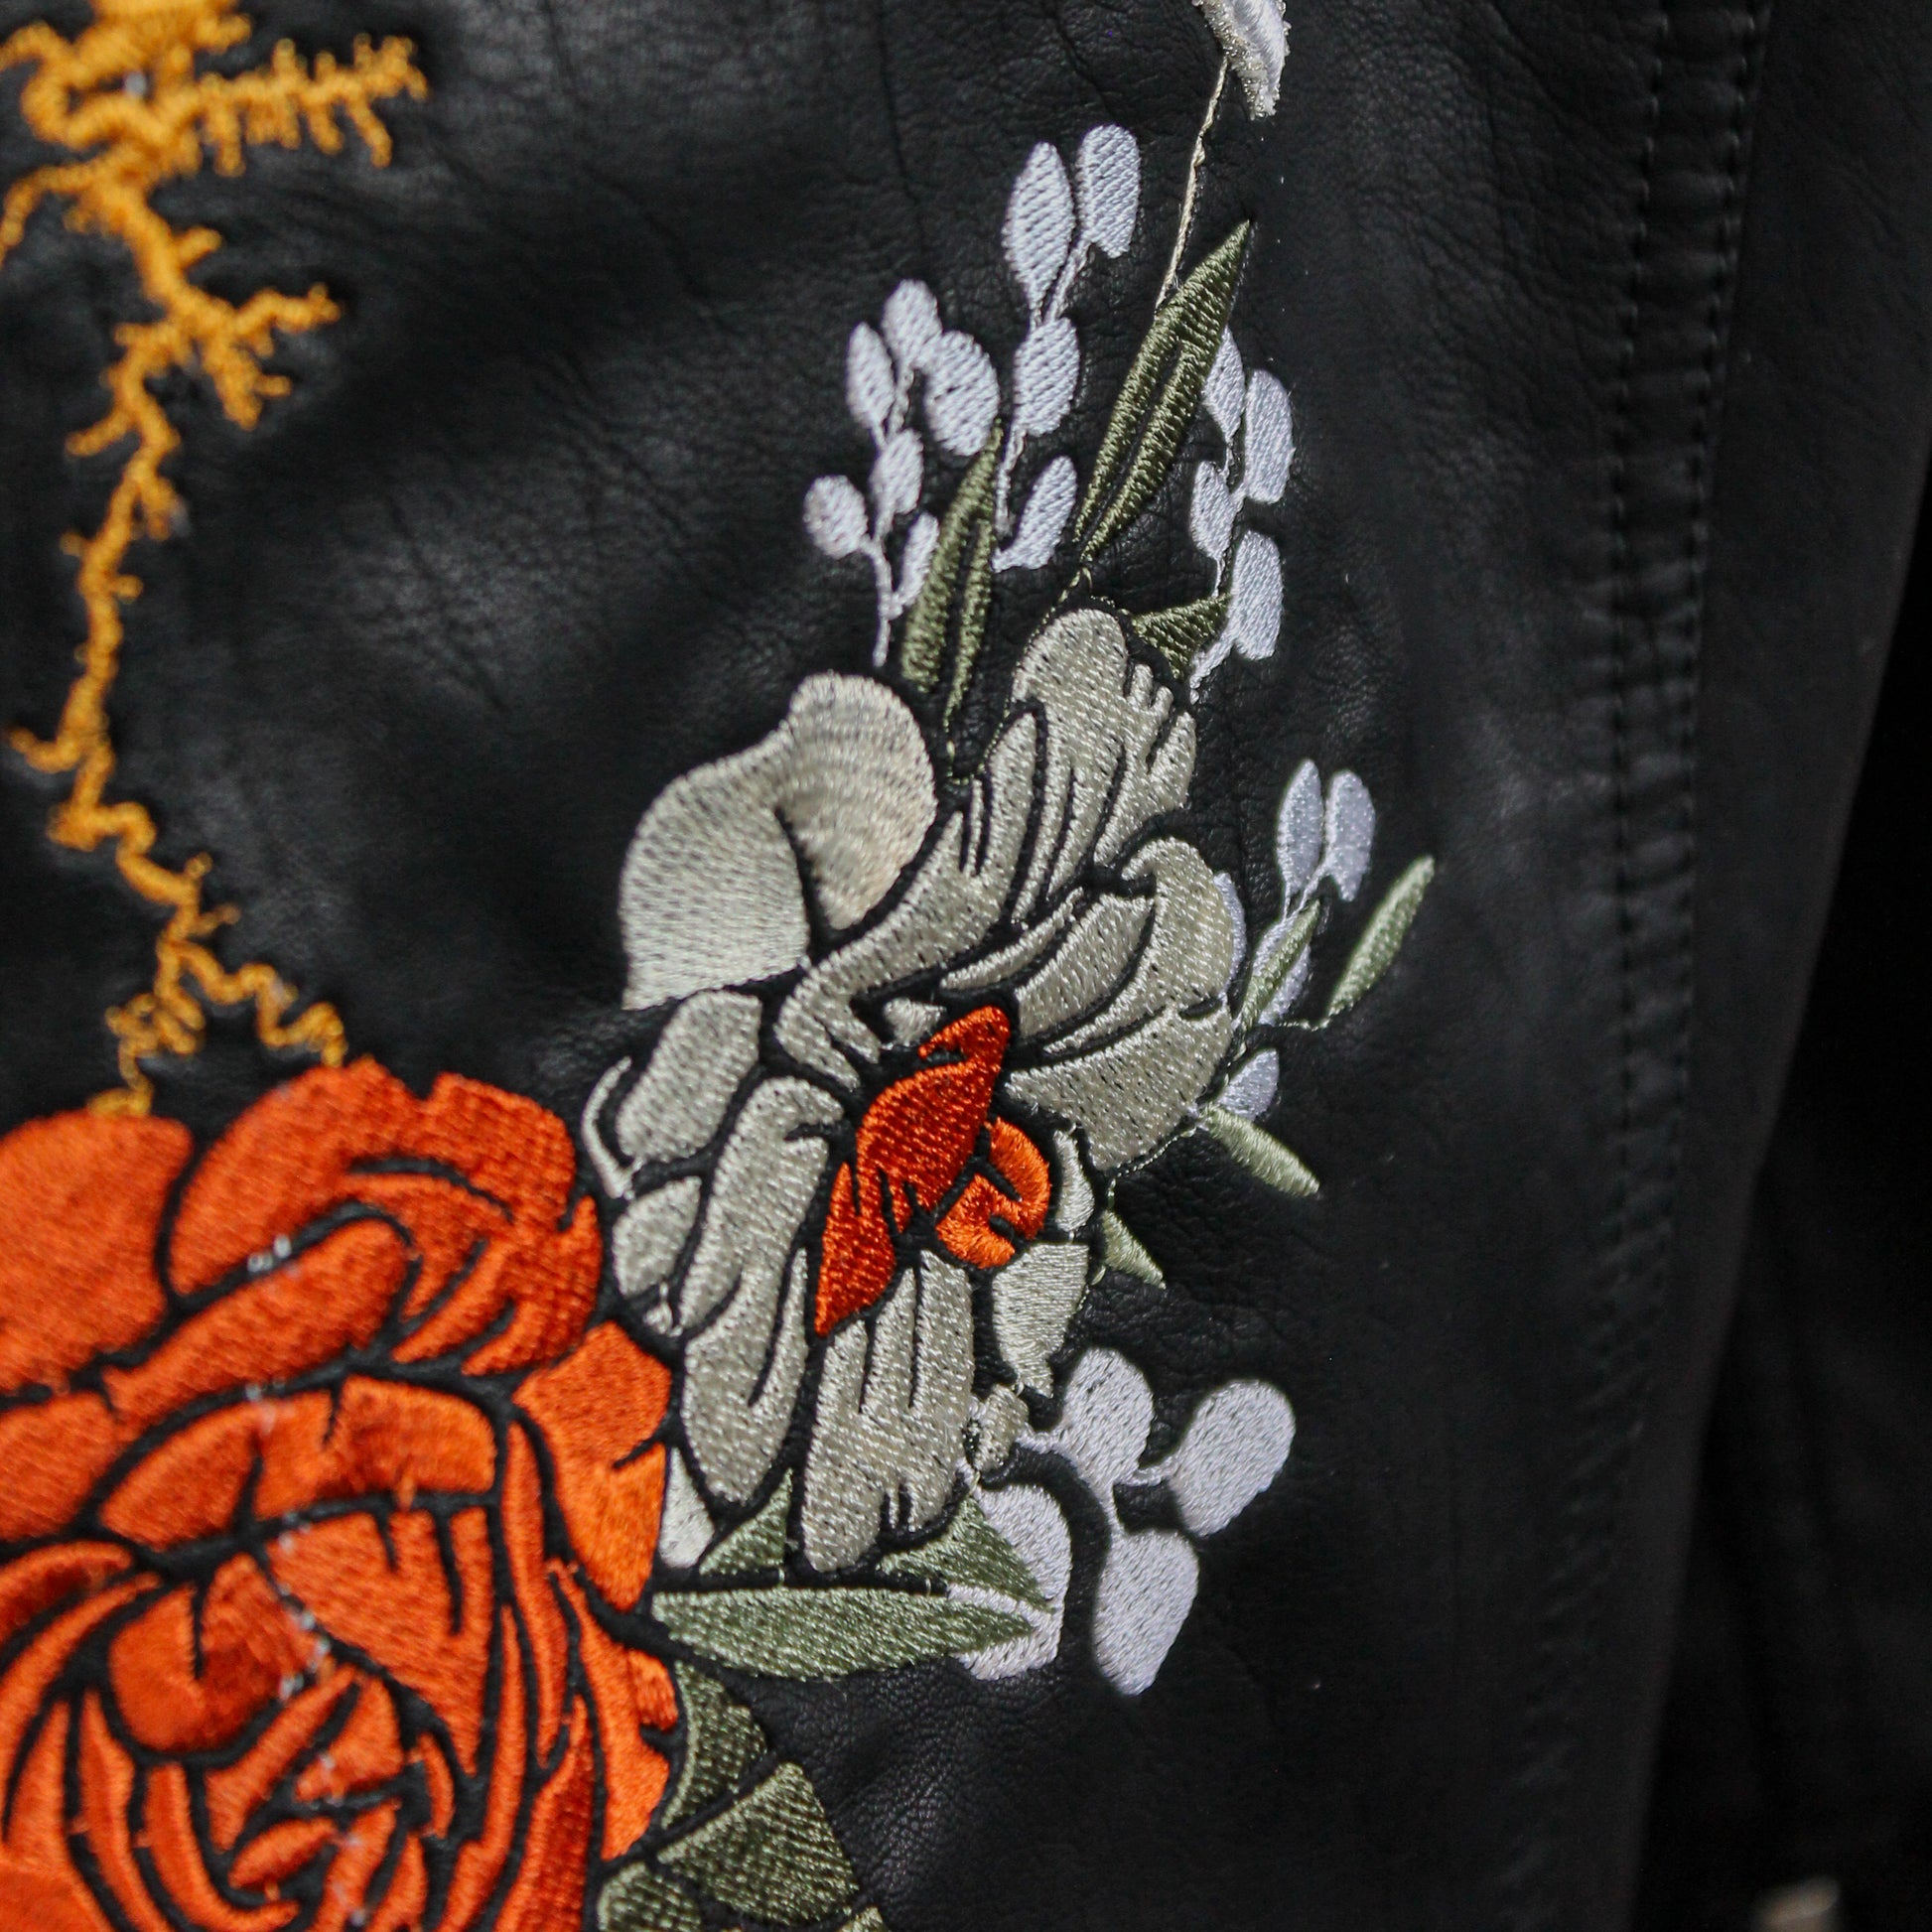 Custom wedding jacket featuring celestial motifs